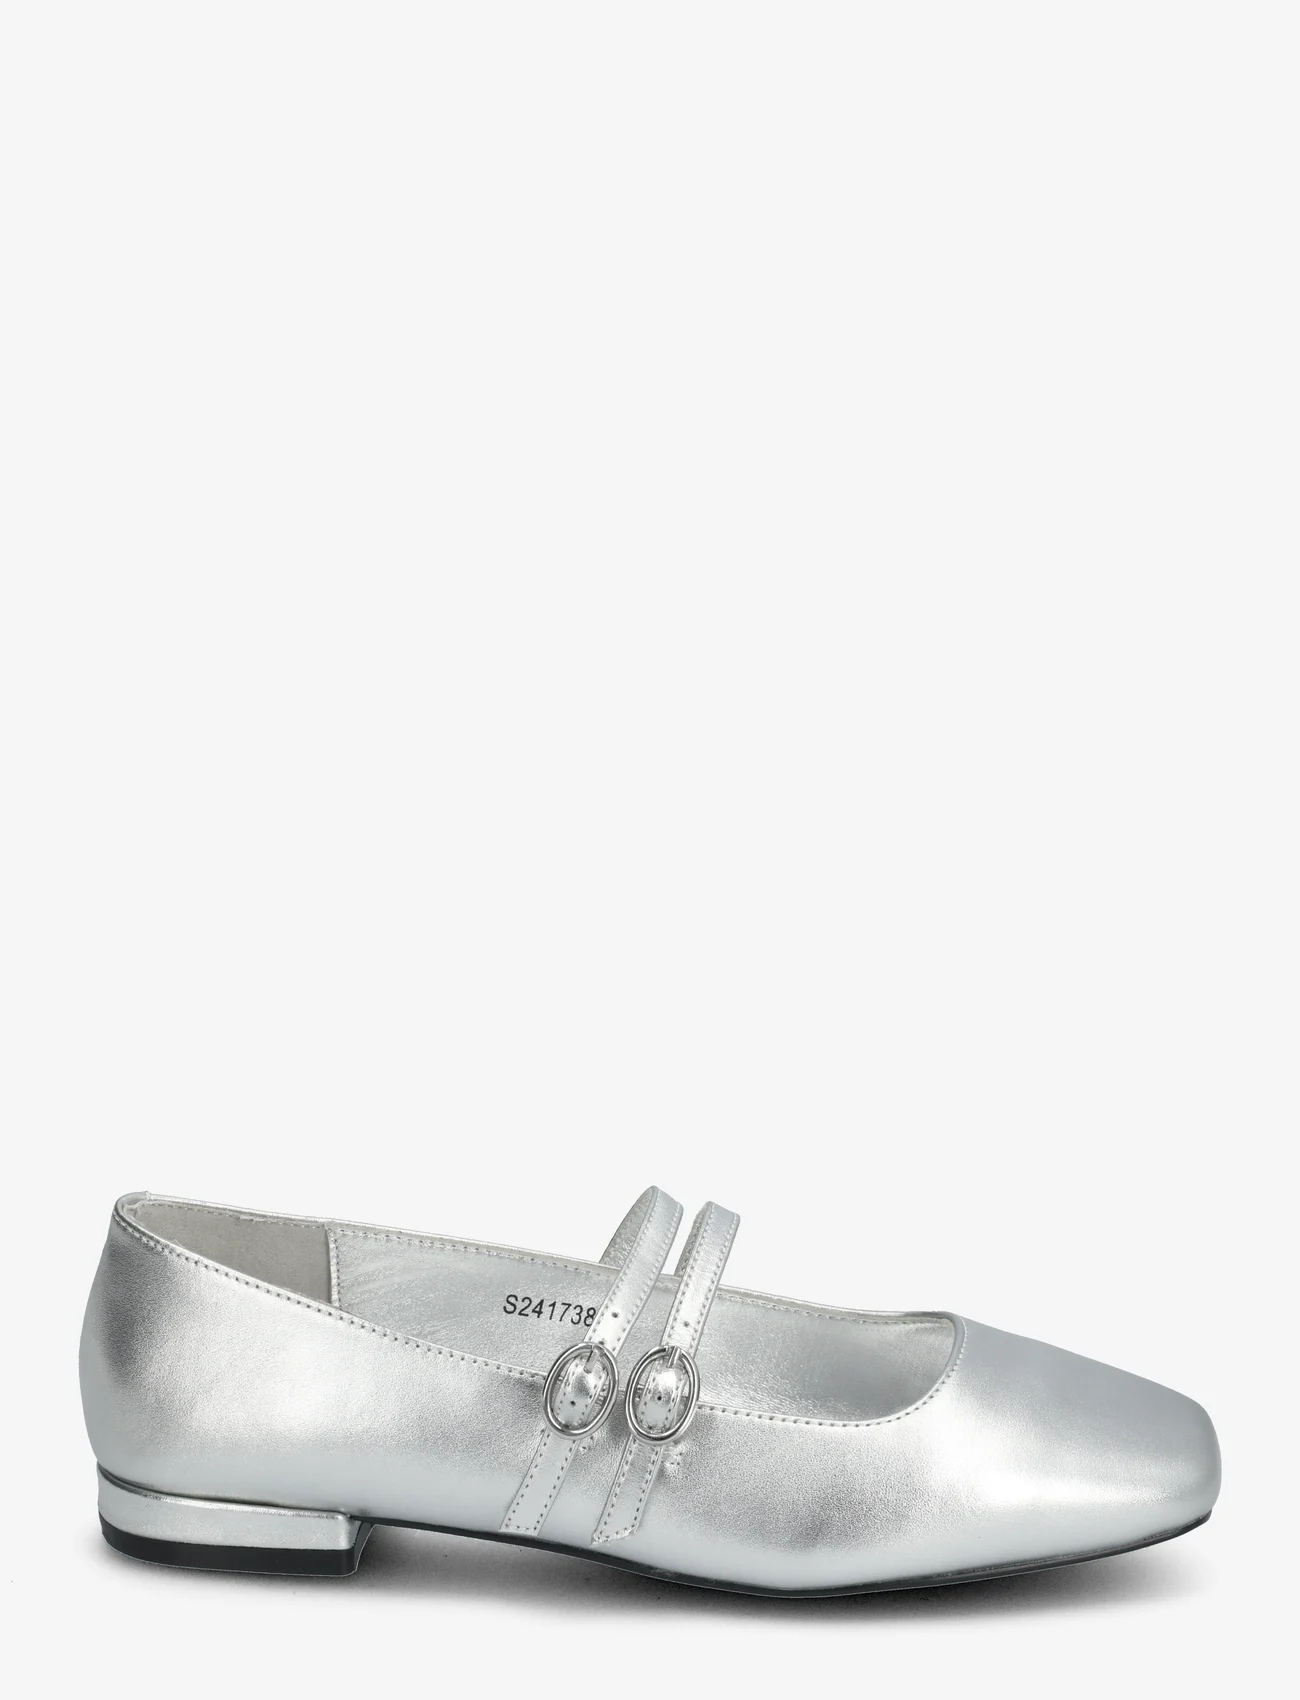 Sofie Schnoor - Shoe - ballīšu apģērbs par outlet cenām - silver - 1